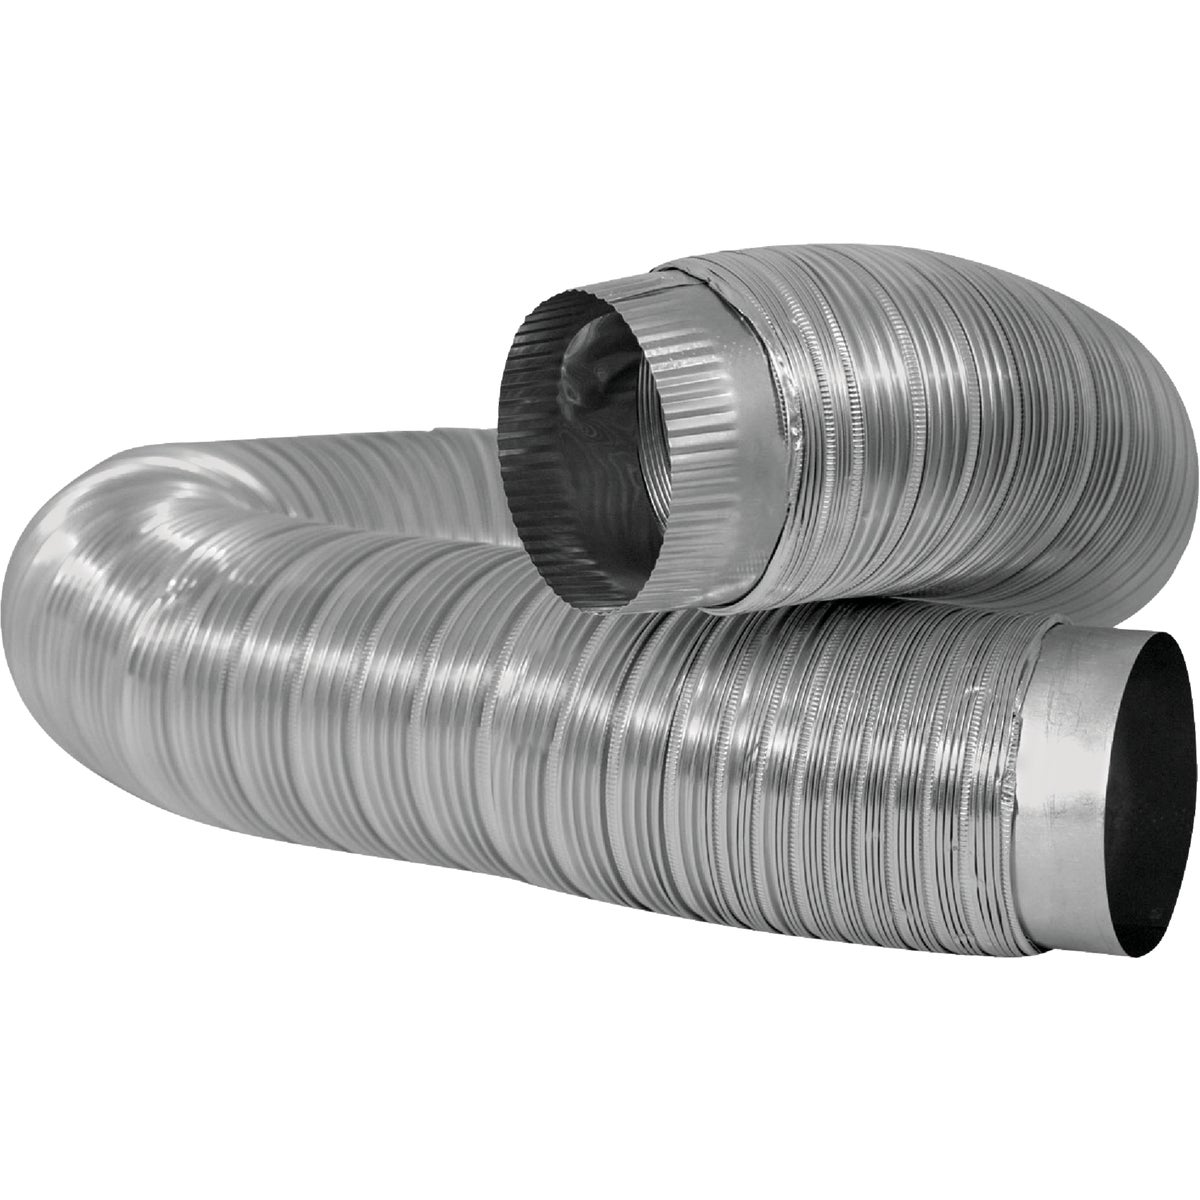 Item 277907, Aluminum semi rigid dryer duct with aluminum connection collar on each end